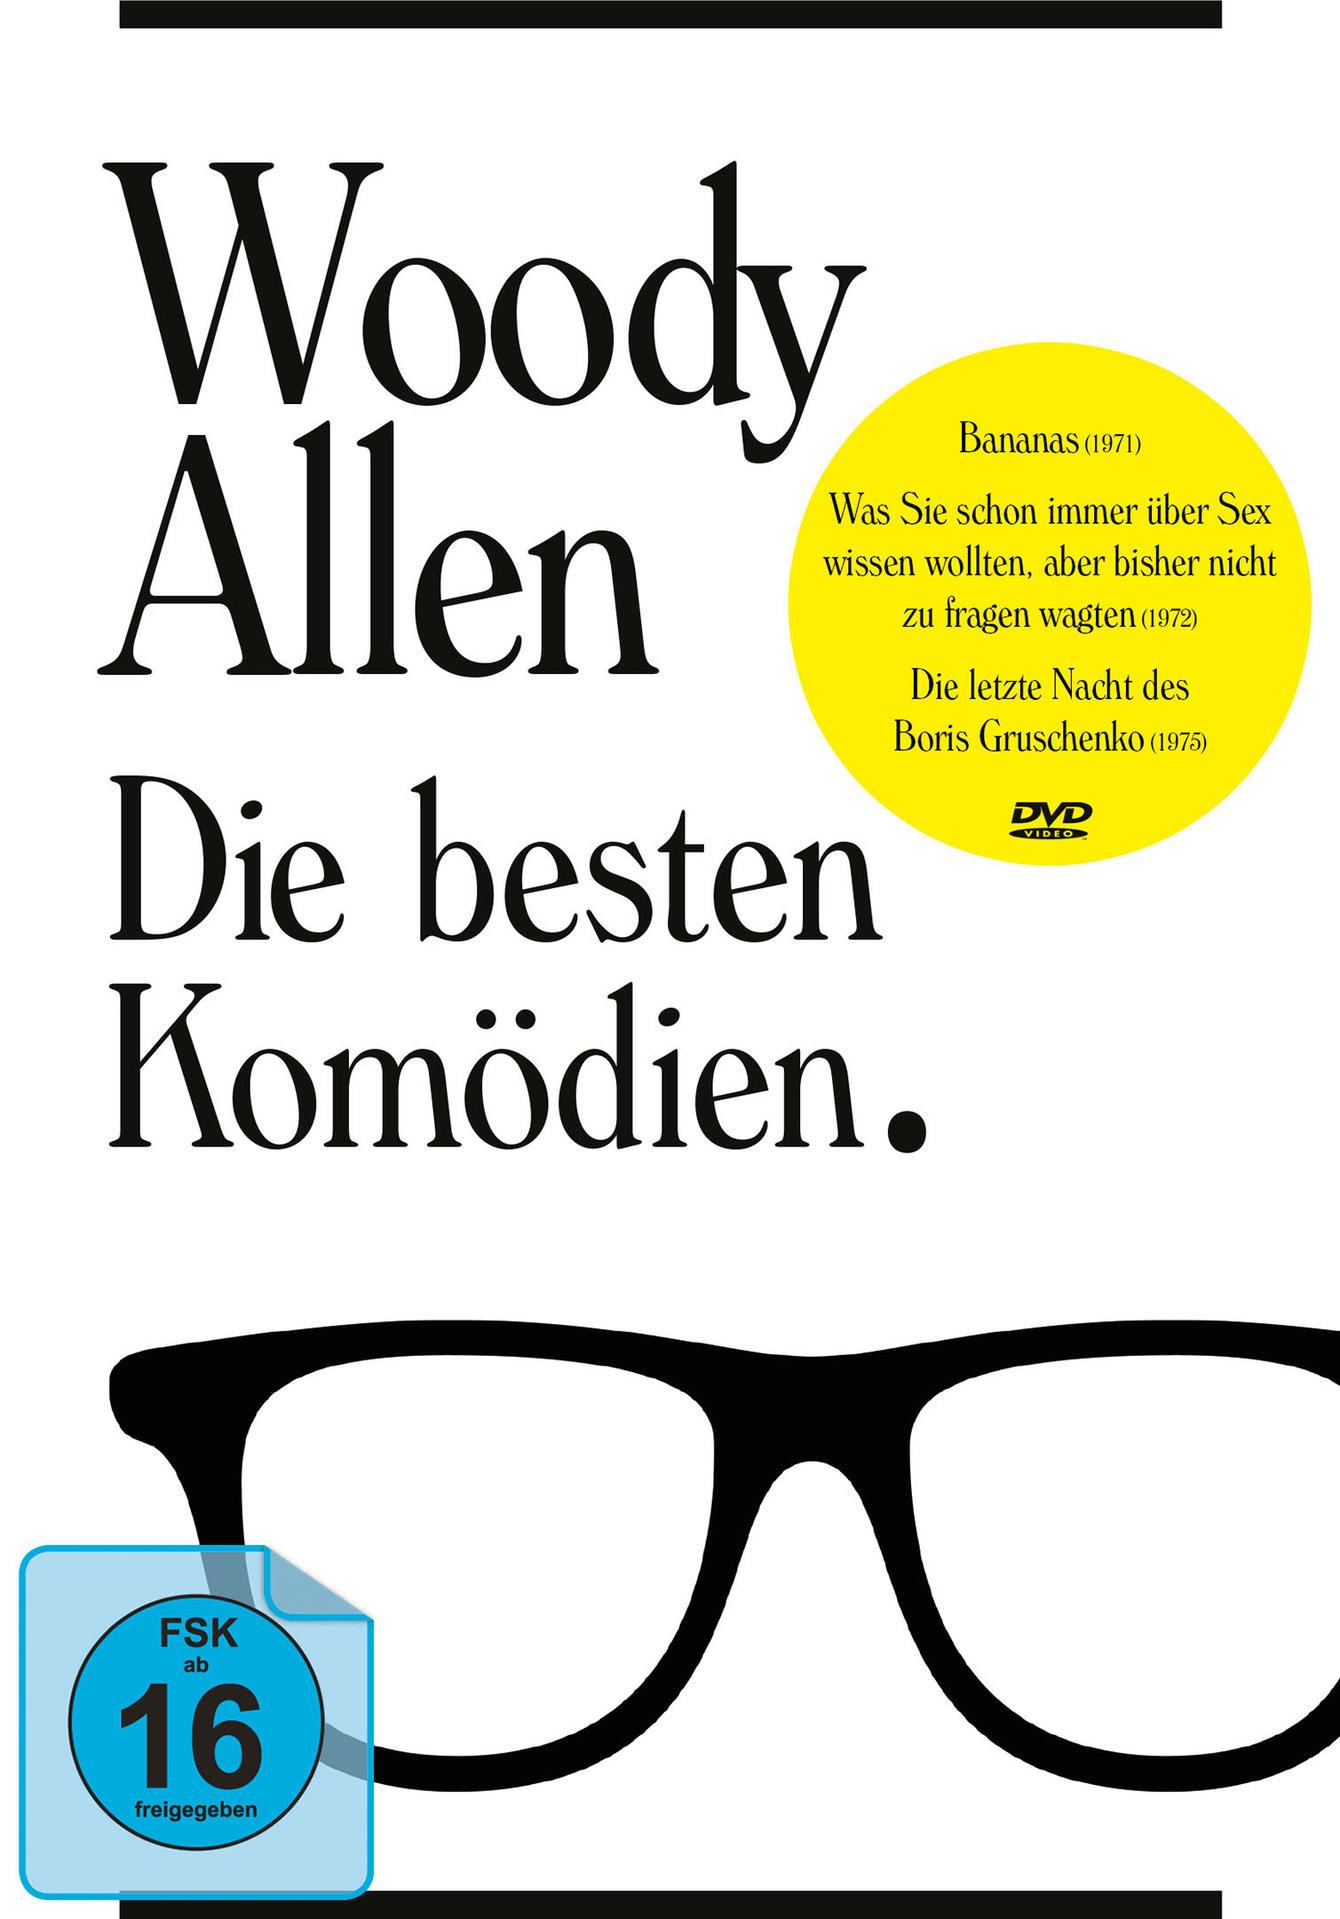 Komödien Woody Die Allen DVD - besten